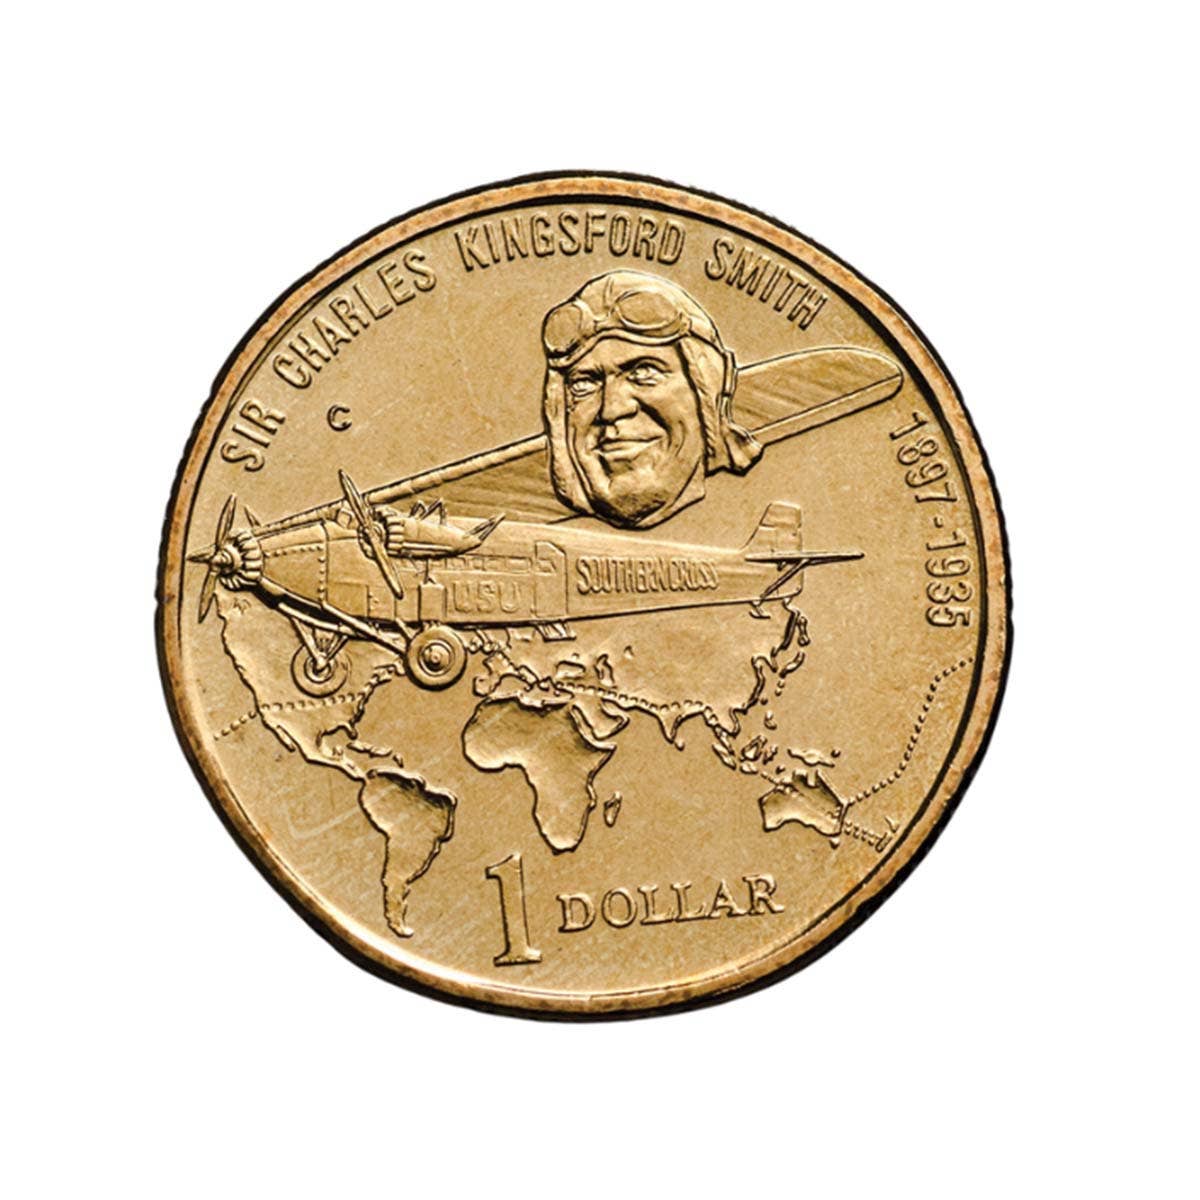 Kingsford Smith 1997 $1 C Mintmark Uncirculated Coin